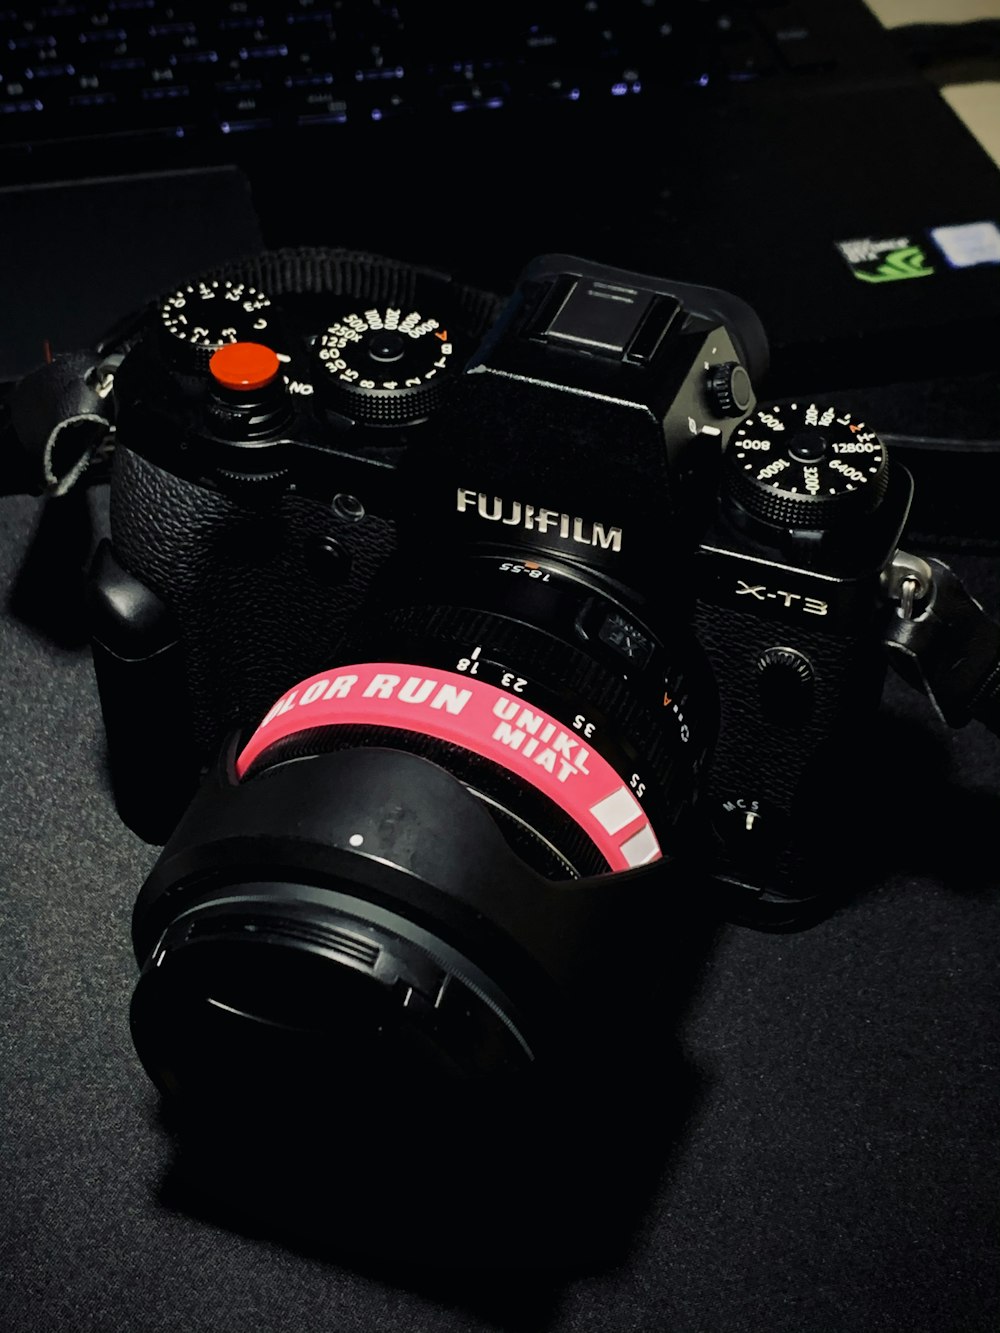 Fotocamera reflex digitale Nikon nera su tessuto grigio